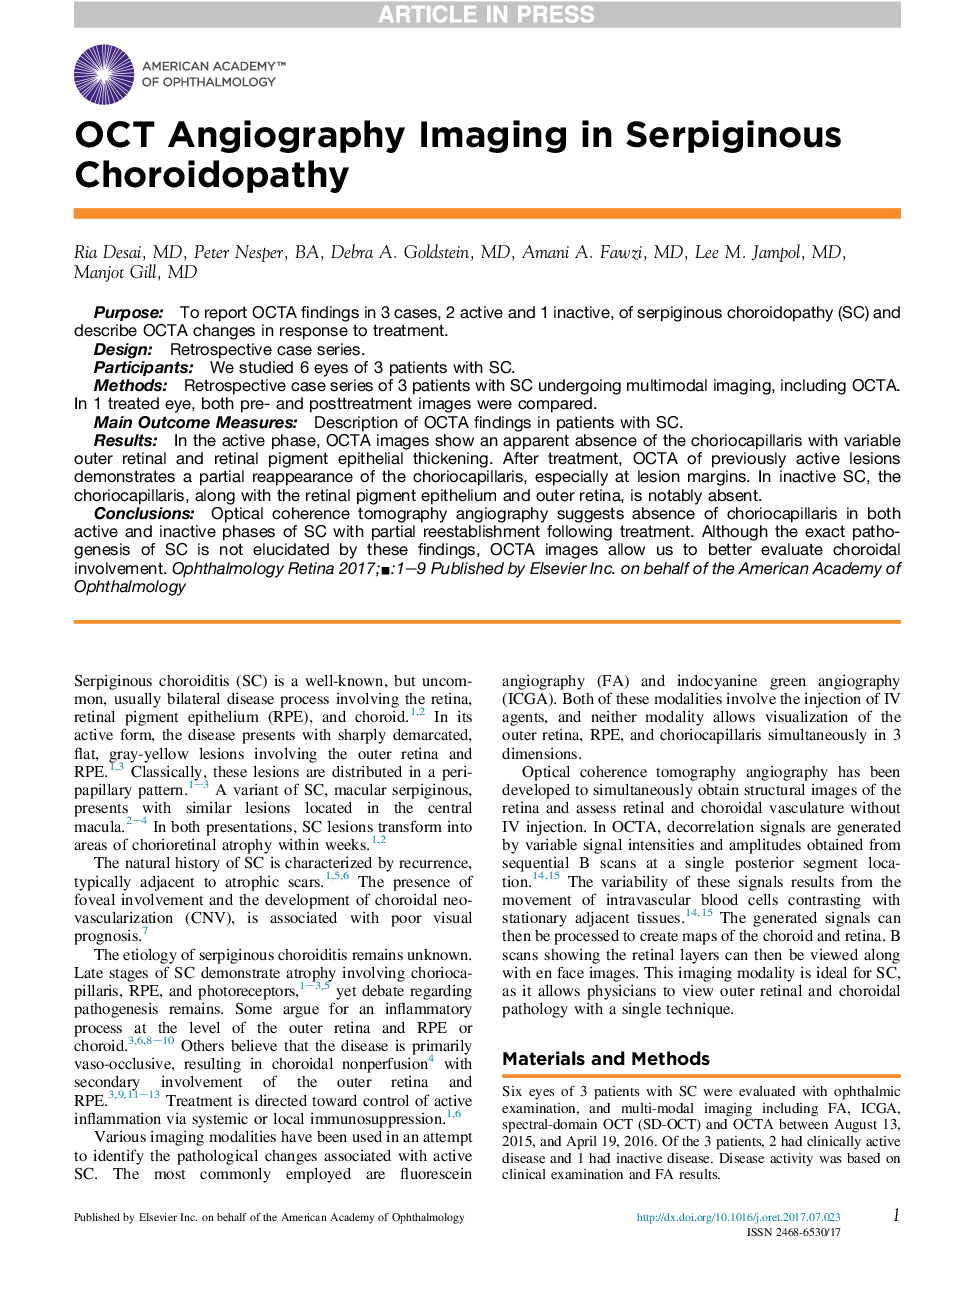 OCT Angiography Imaging in Serpiginous Choroidopathy